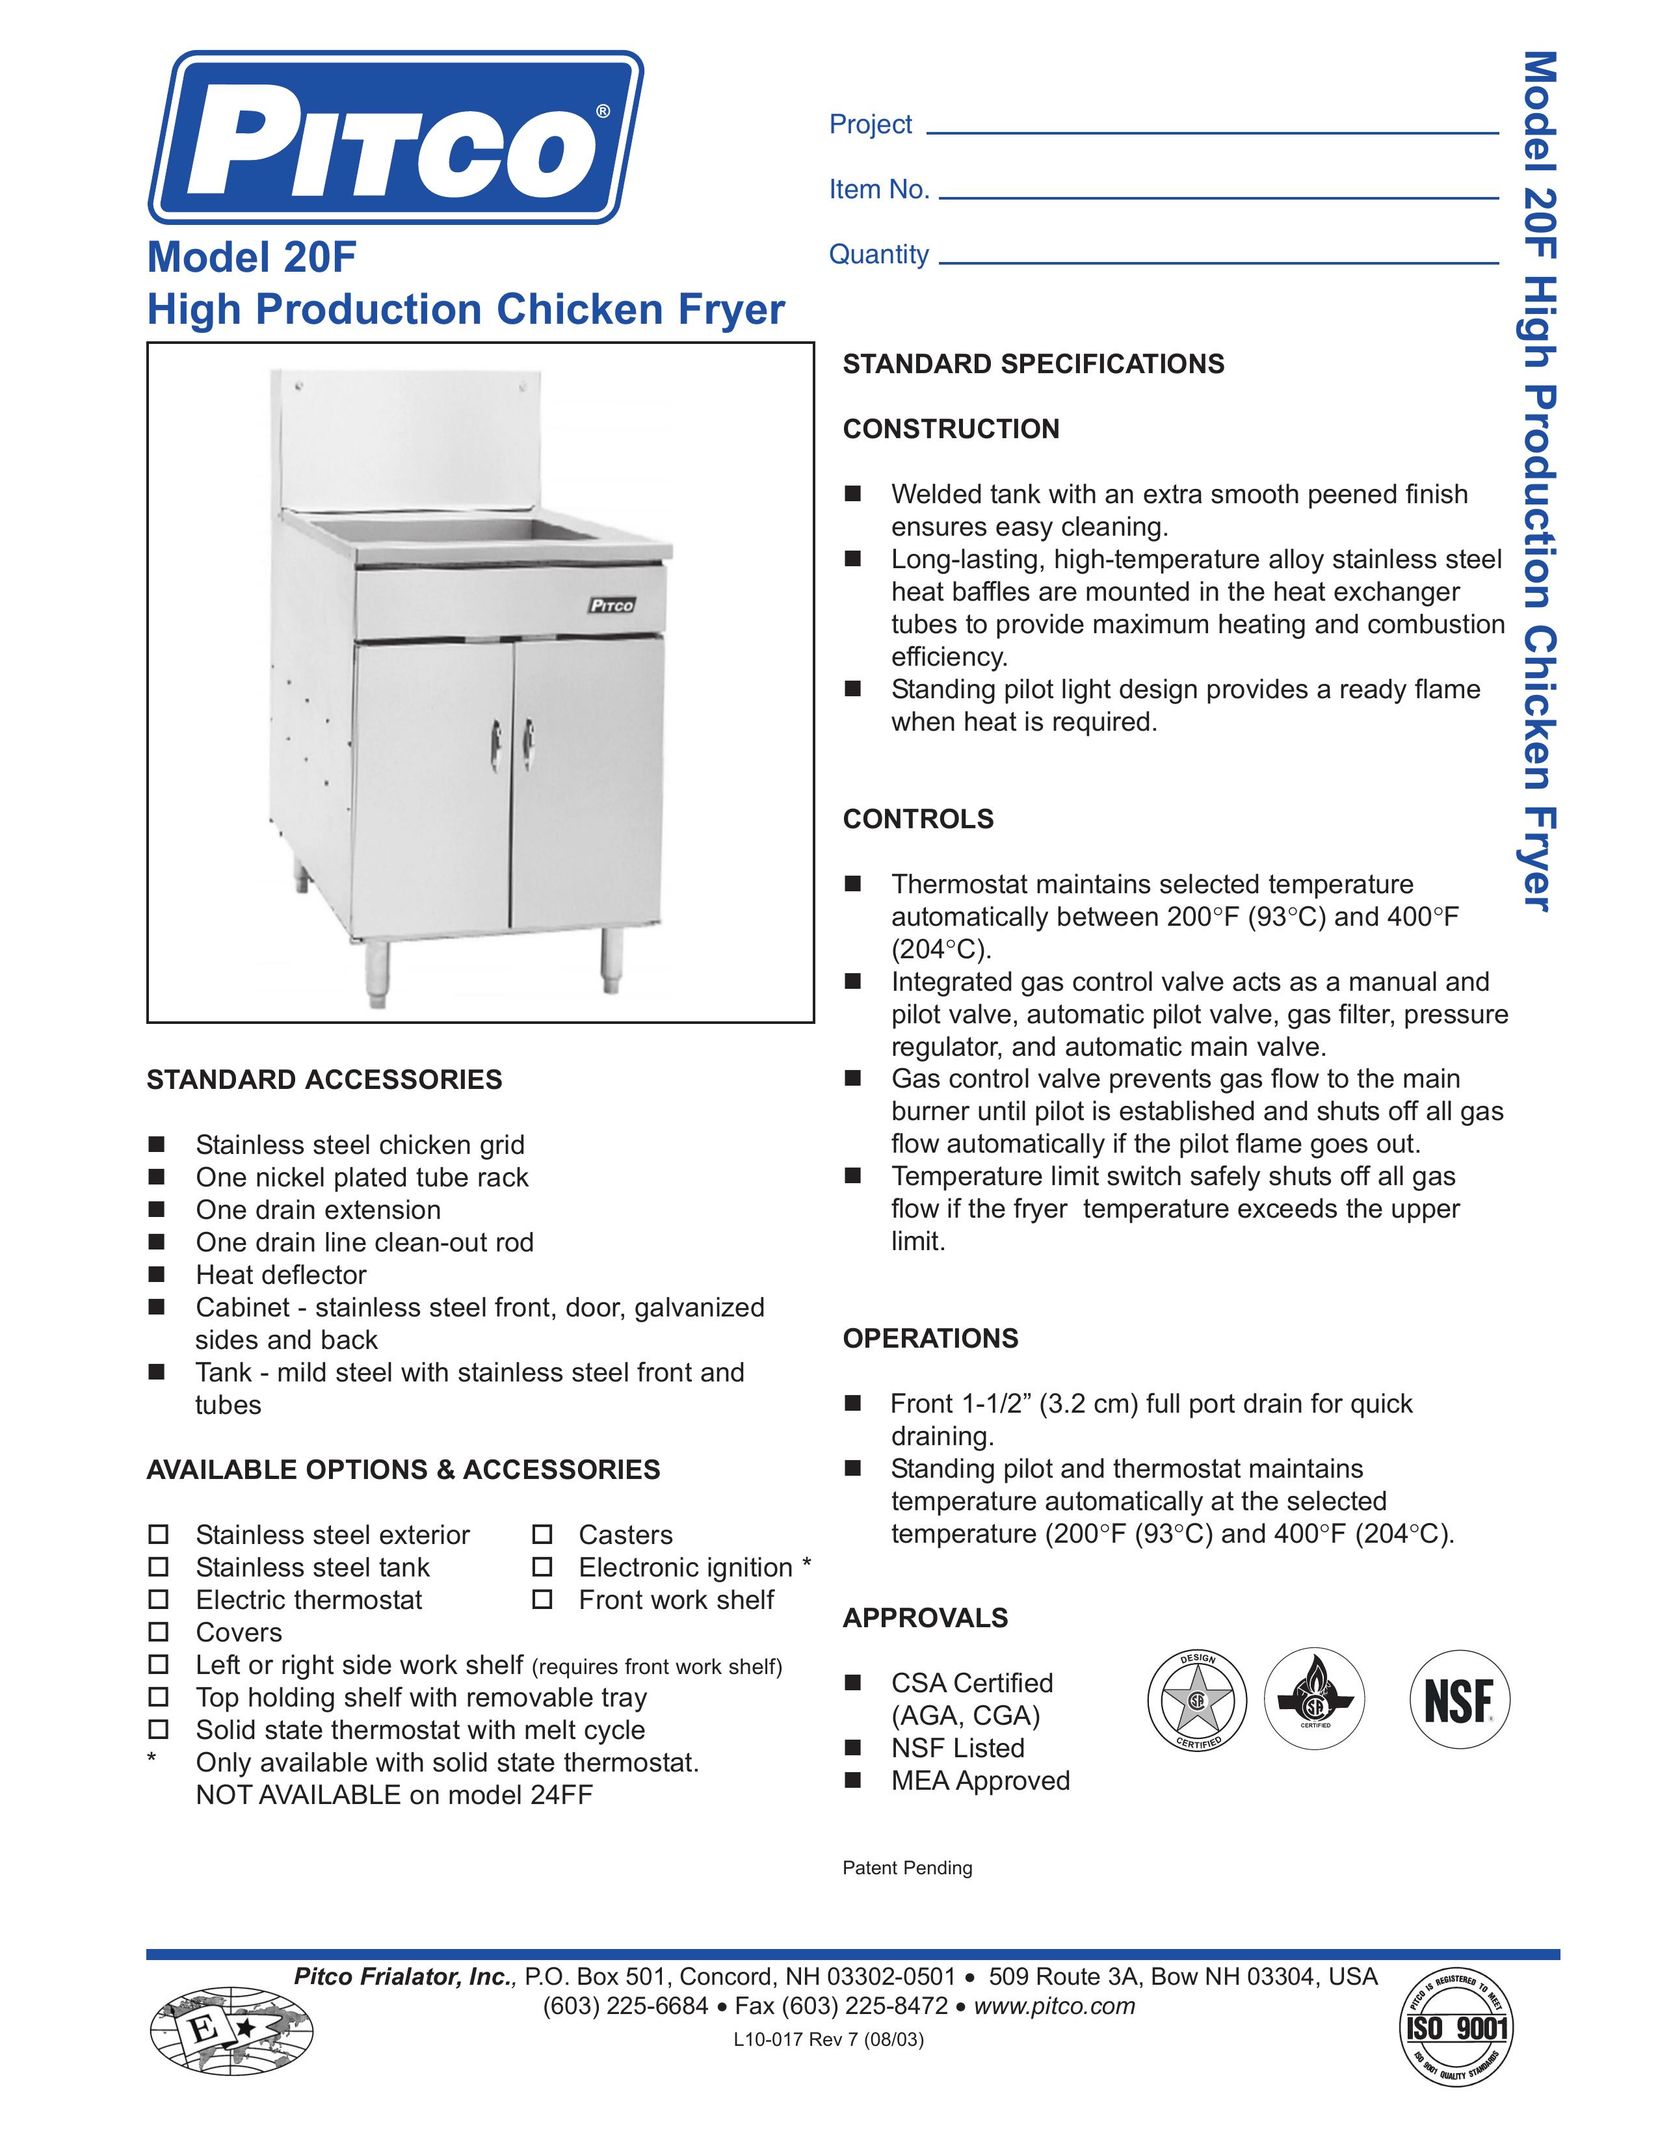 Pitco Frialator 20F Fryer User Manual